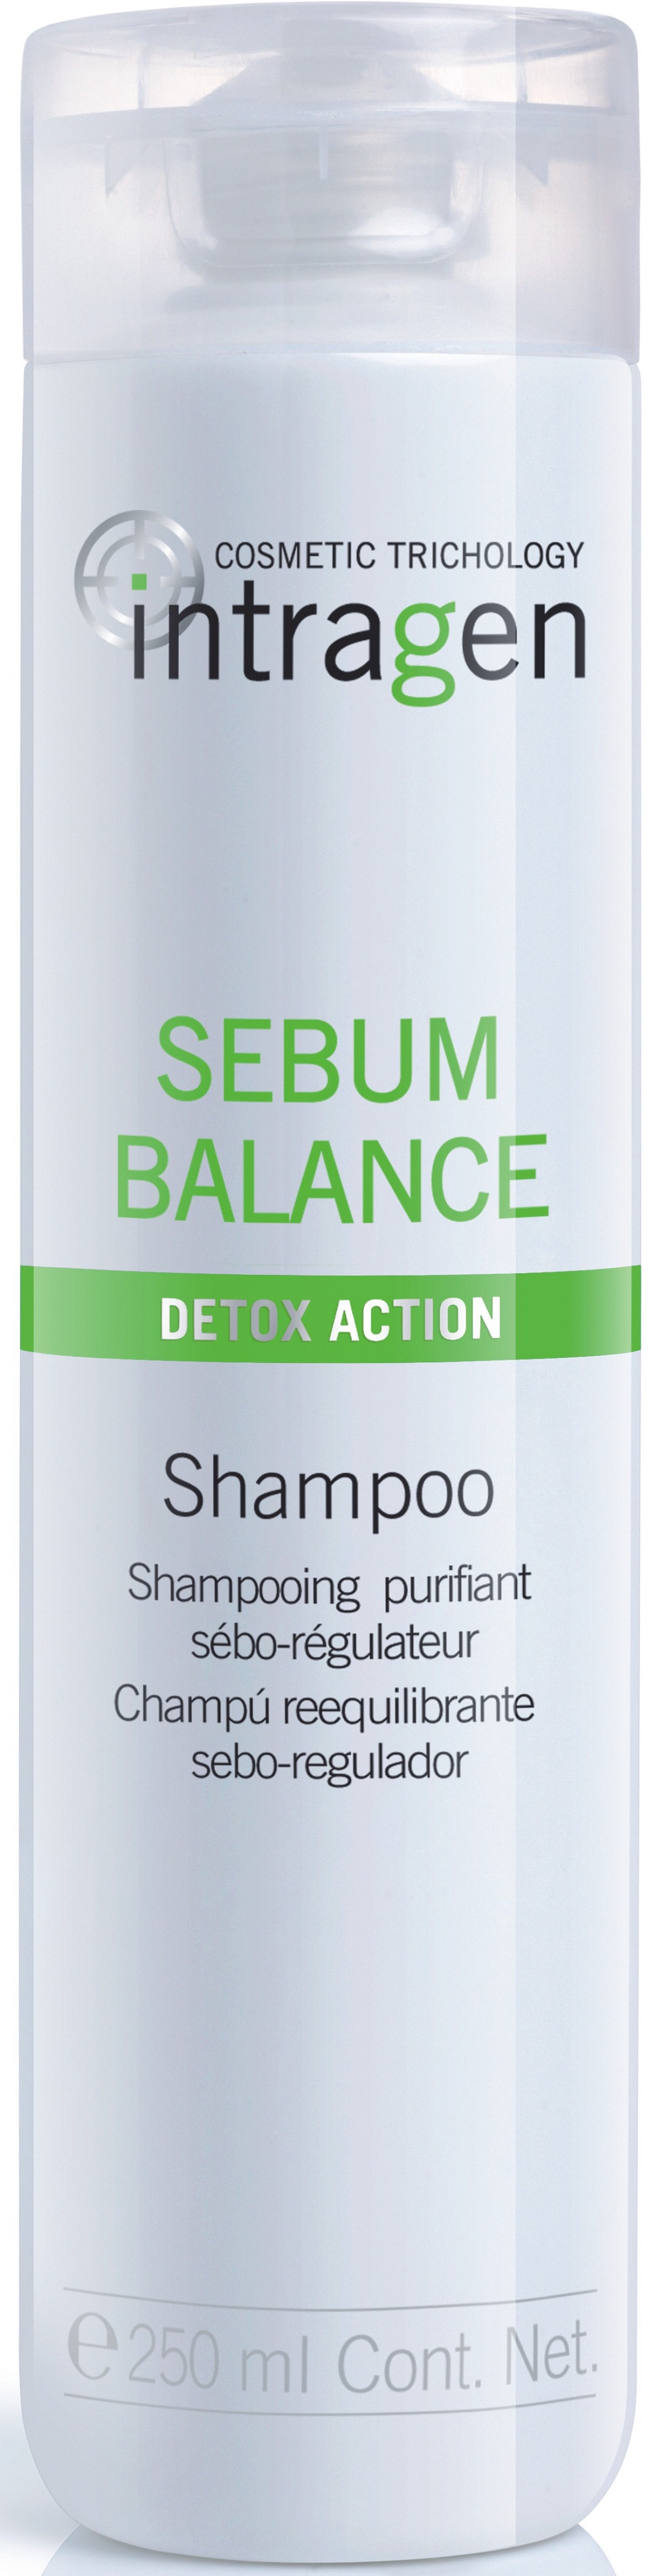 Intragen Sebum Balance Shampoo 250ml